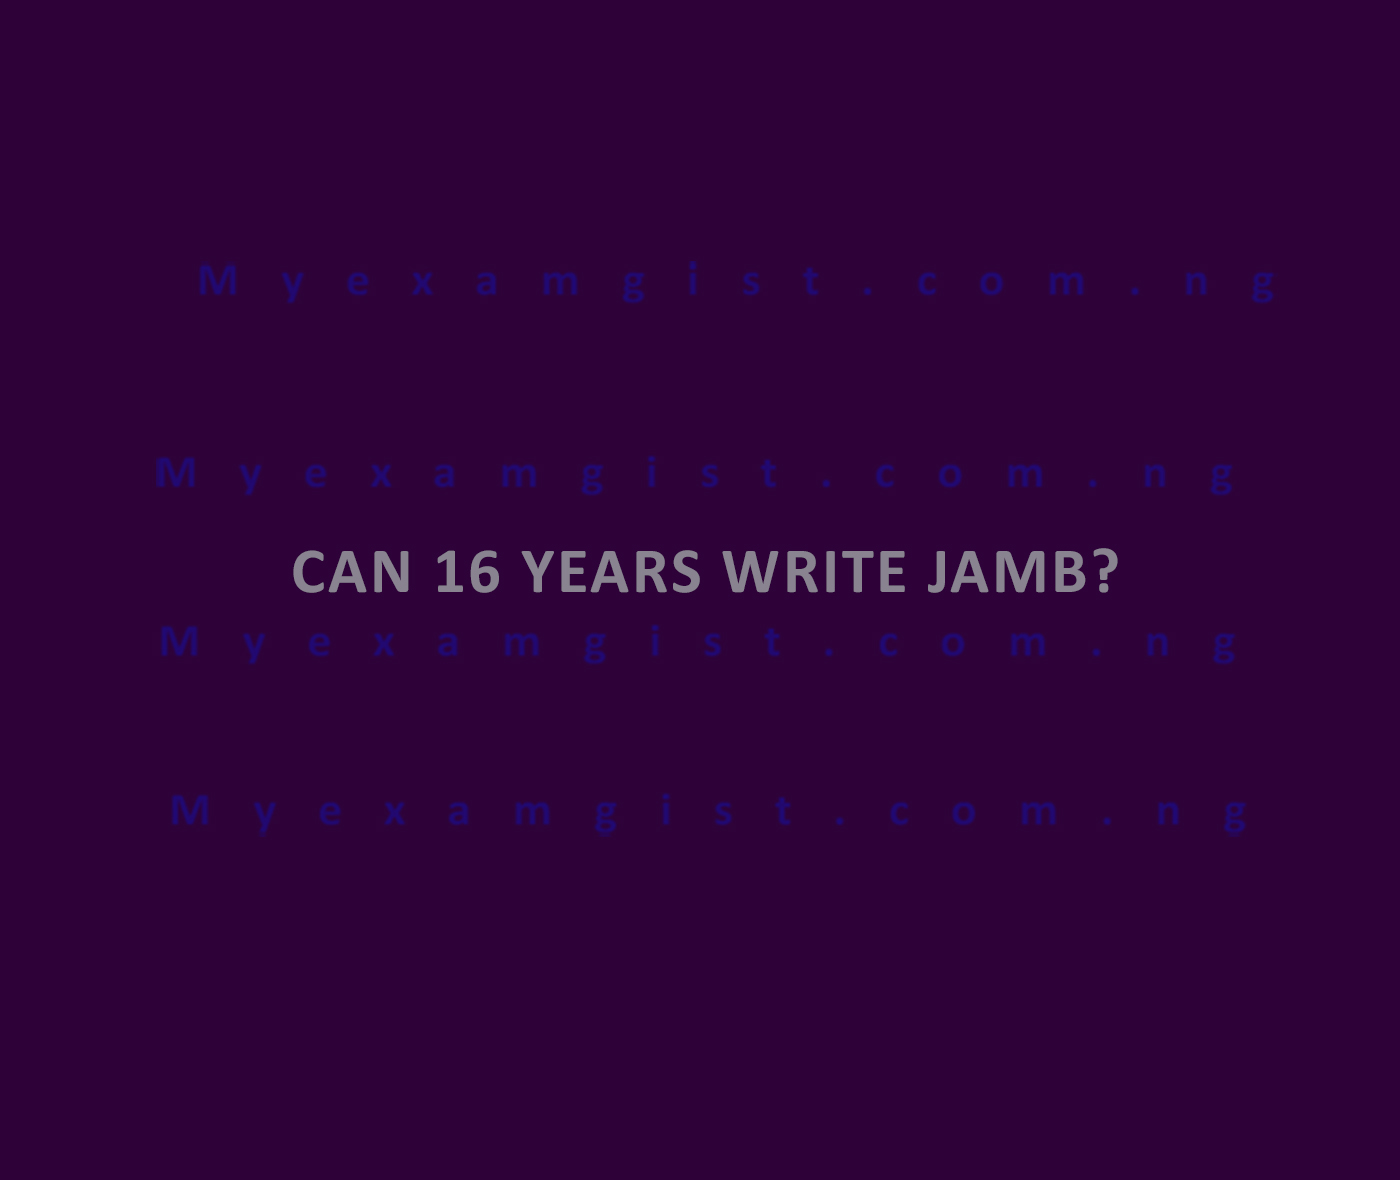 Can 16 years write JAMB?